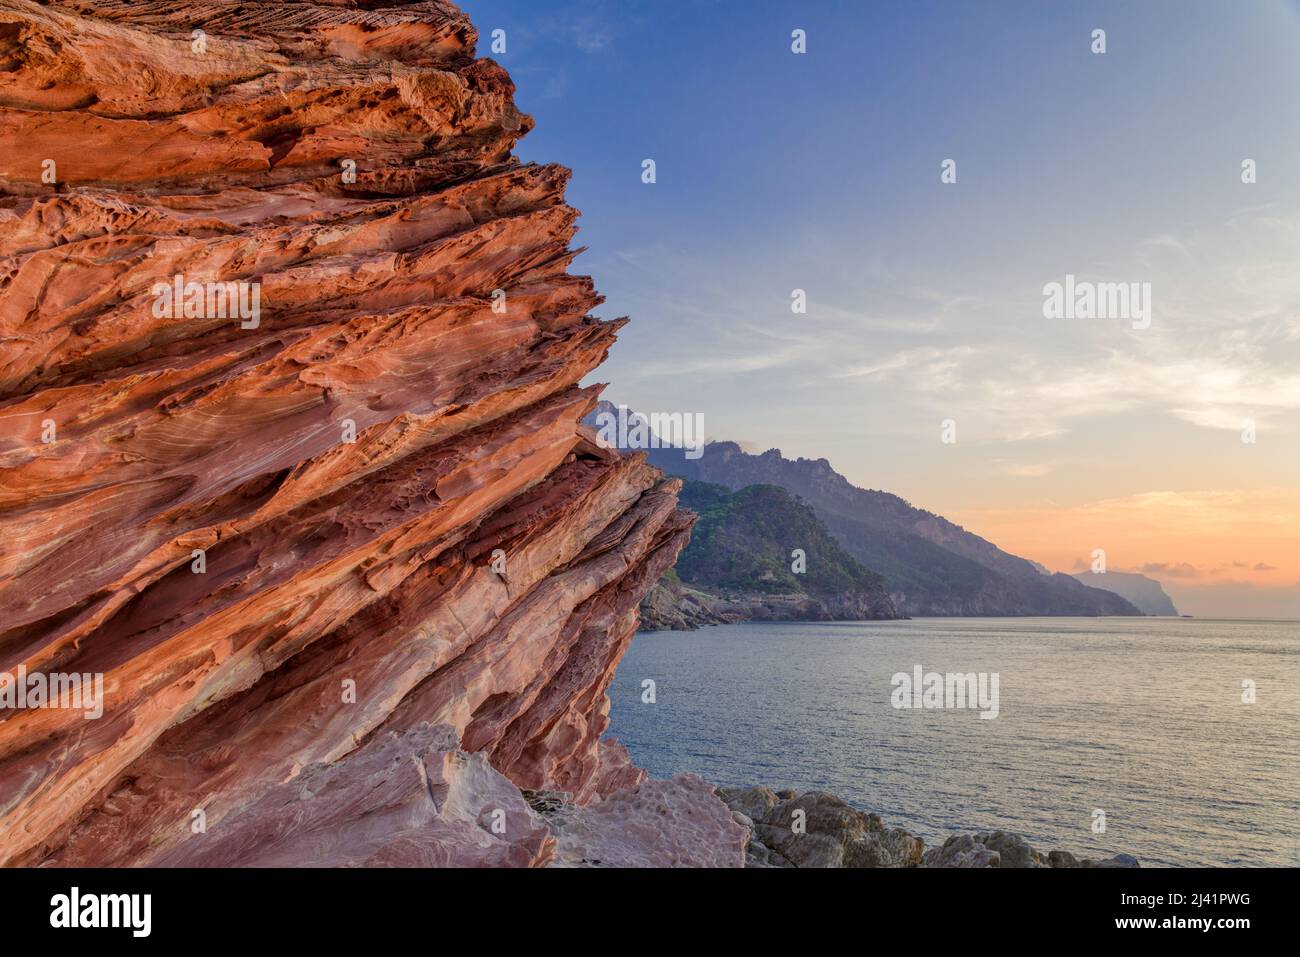 The strange shapes of the rock in Estellencs. Serra de Tramuntana in the background. Majorca, Balearic Islands, Spain. Stock Photo